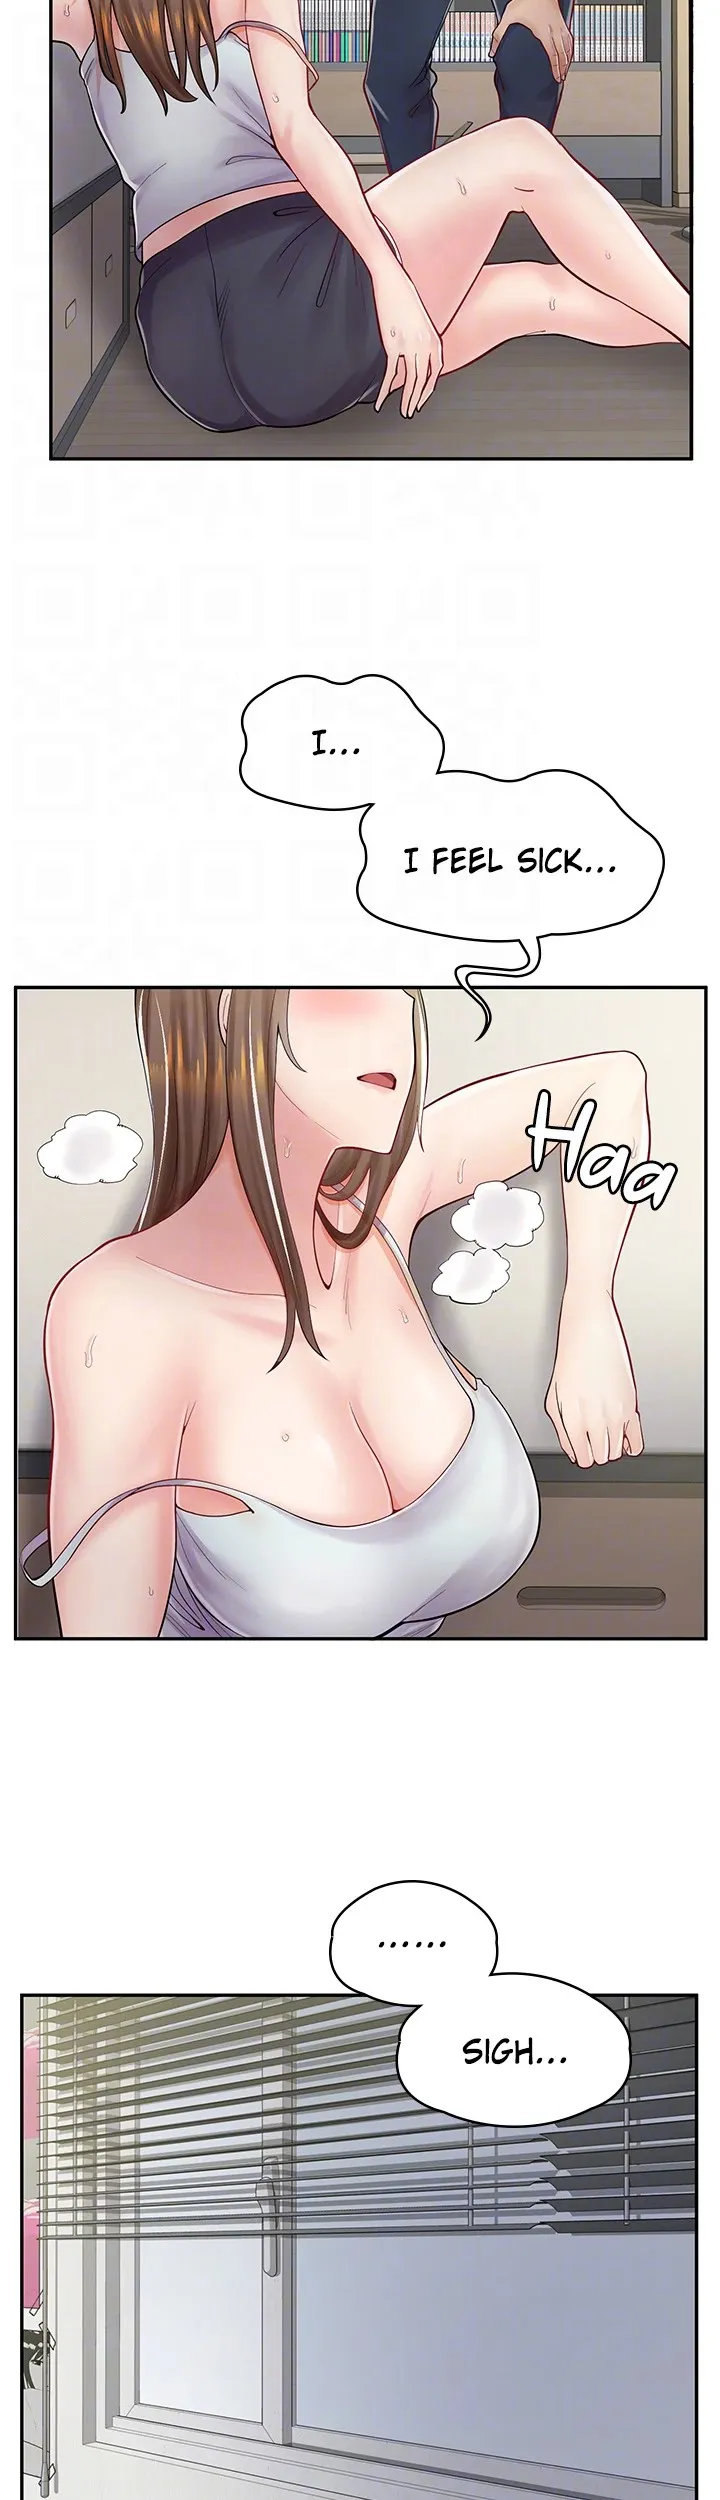 Erotic Manga Café Girls - Chapter 6 Page 19